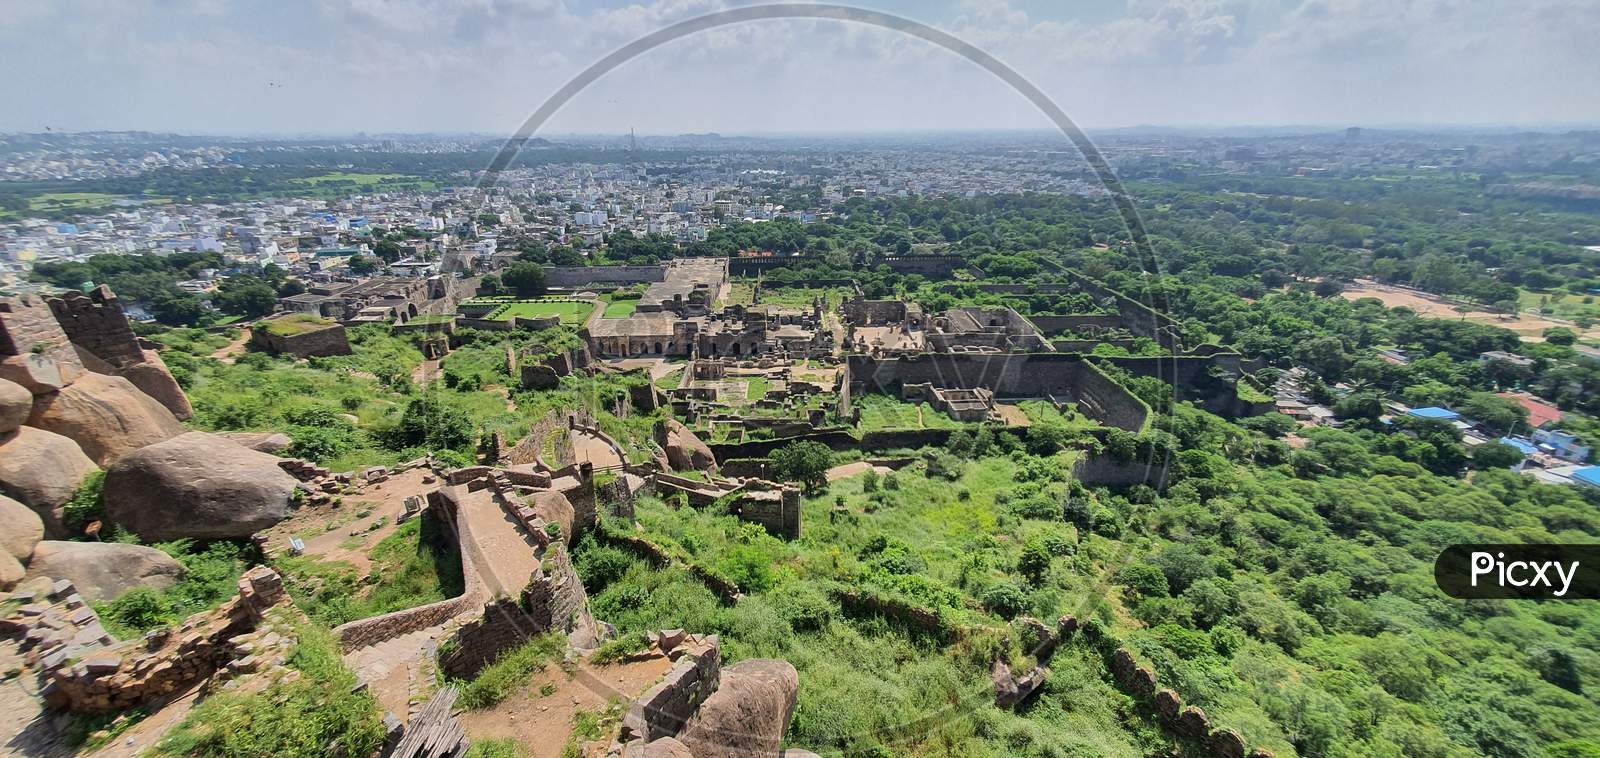 Golconda Fort - Scenic wonder of Hyderabad